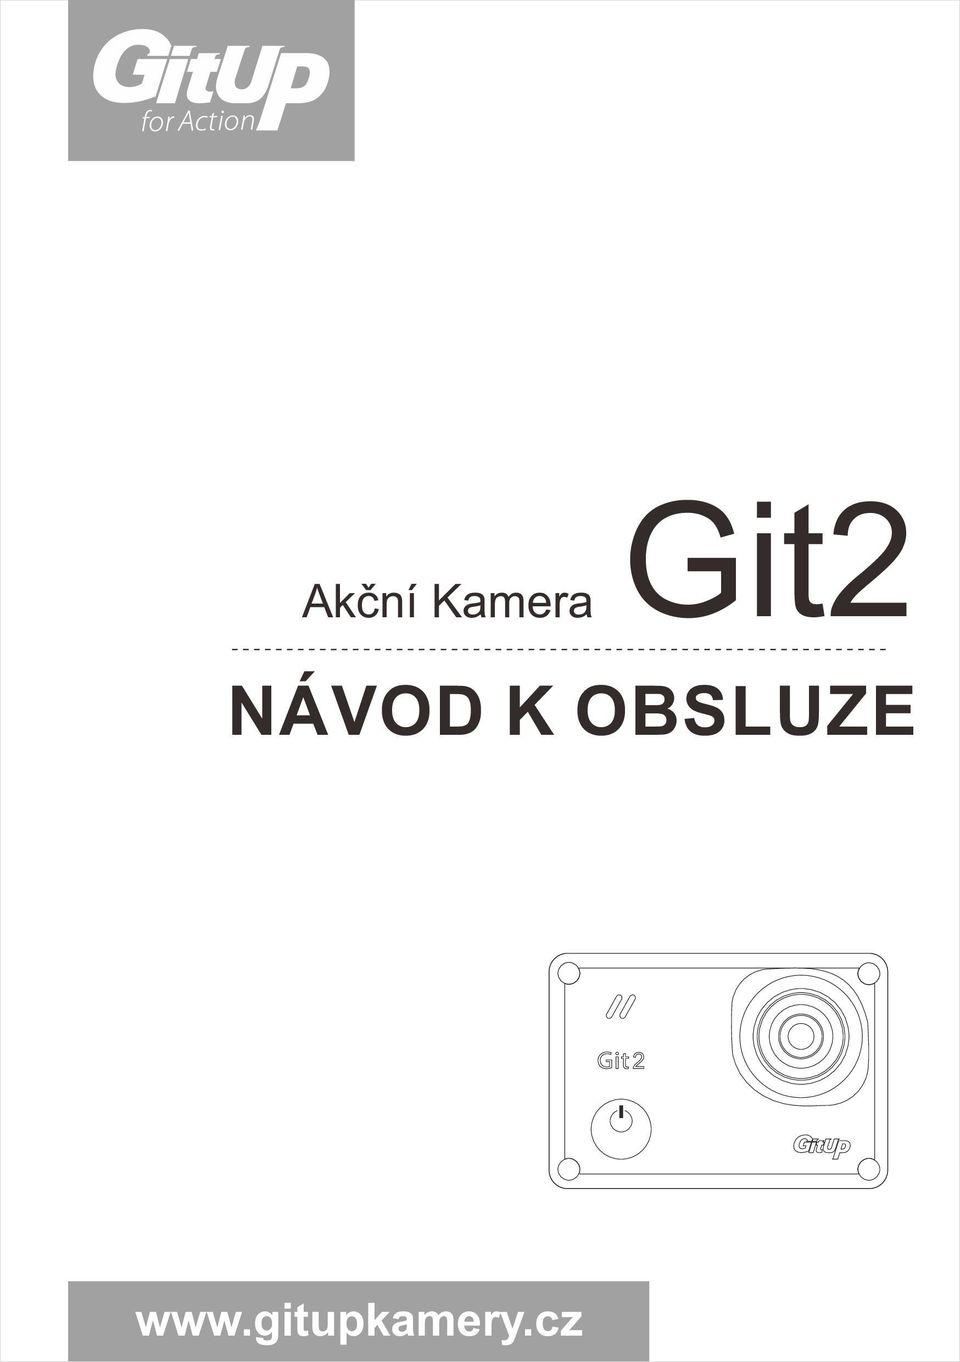 Git2